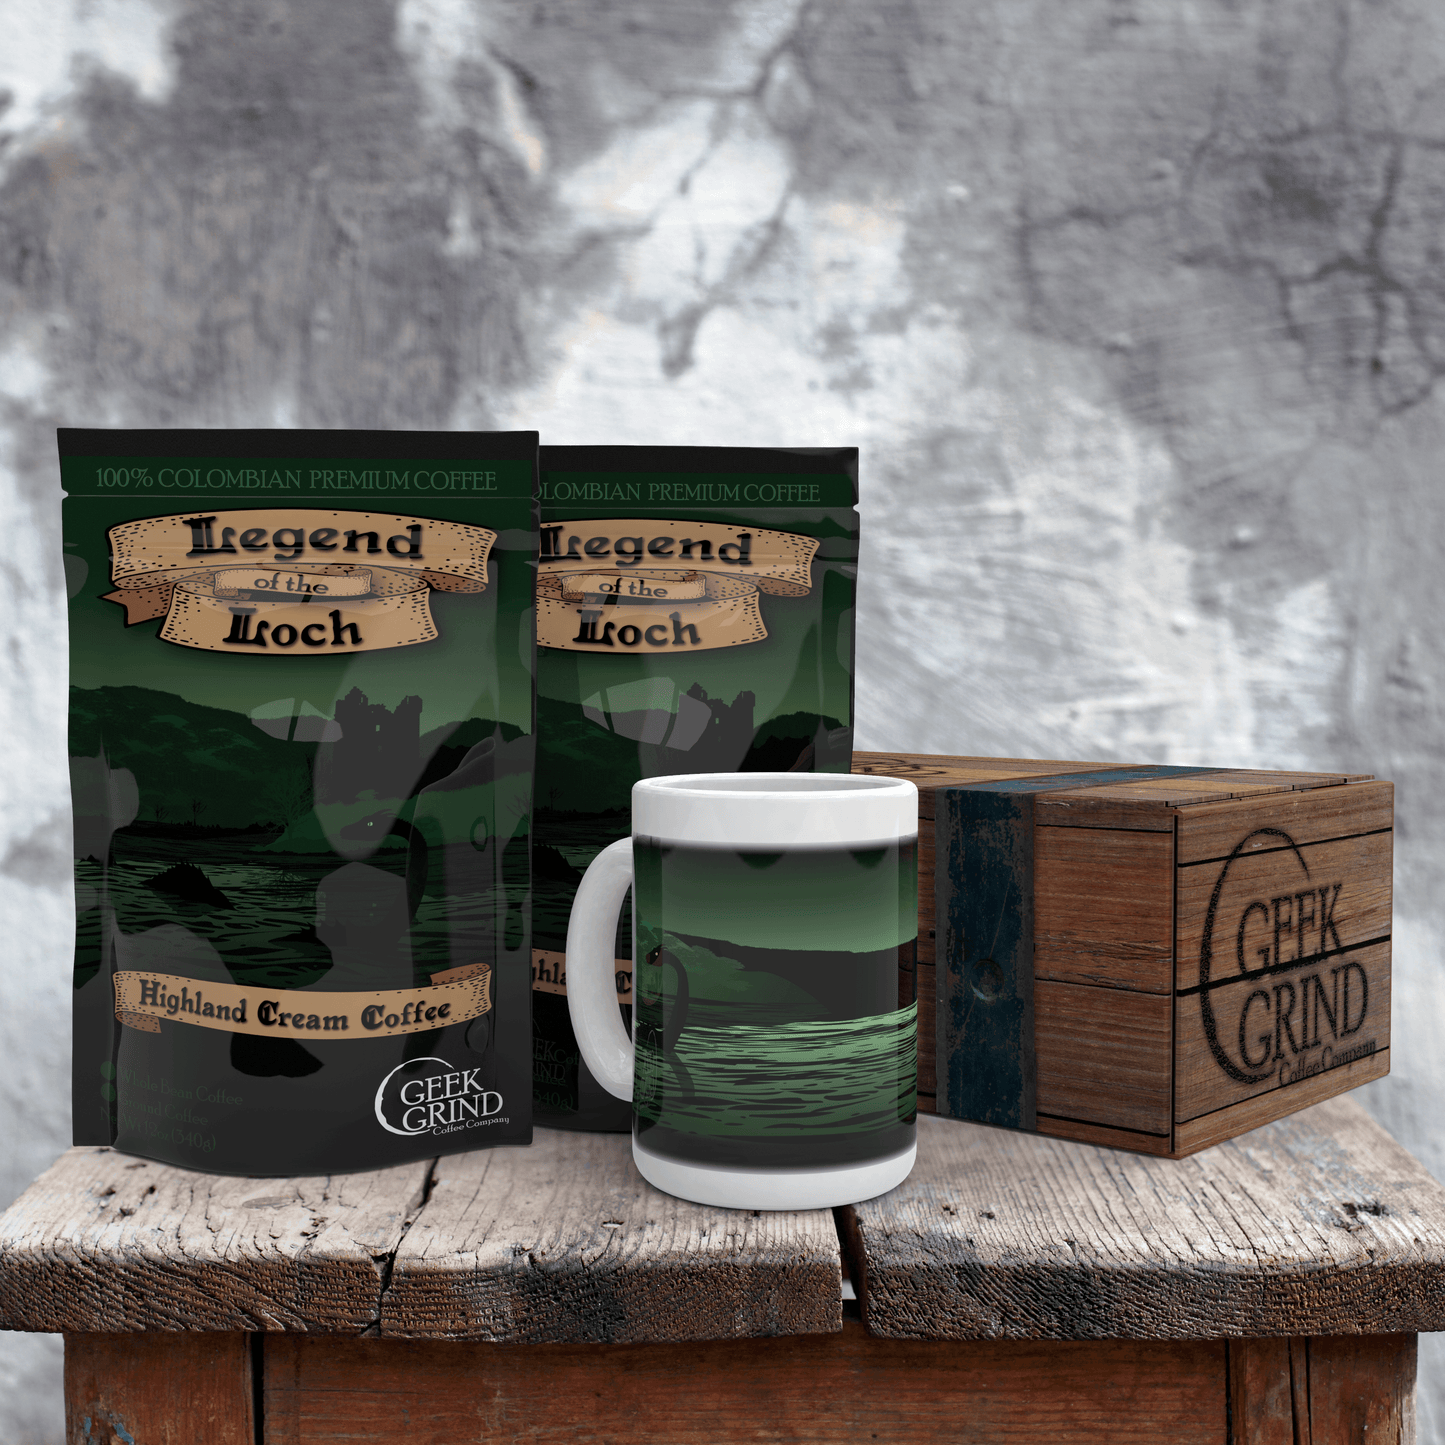 Legend of the Loch Highland Cream Crate - Geek Grind Coffee